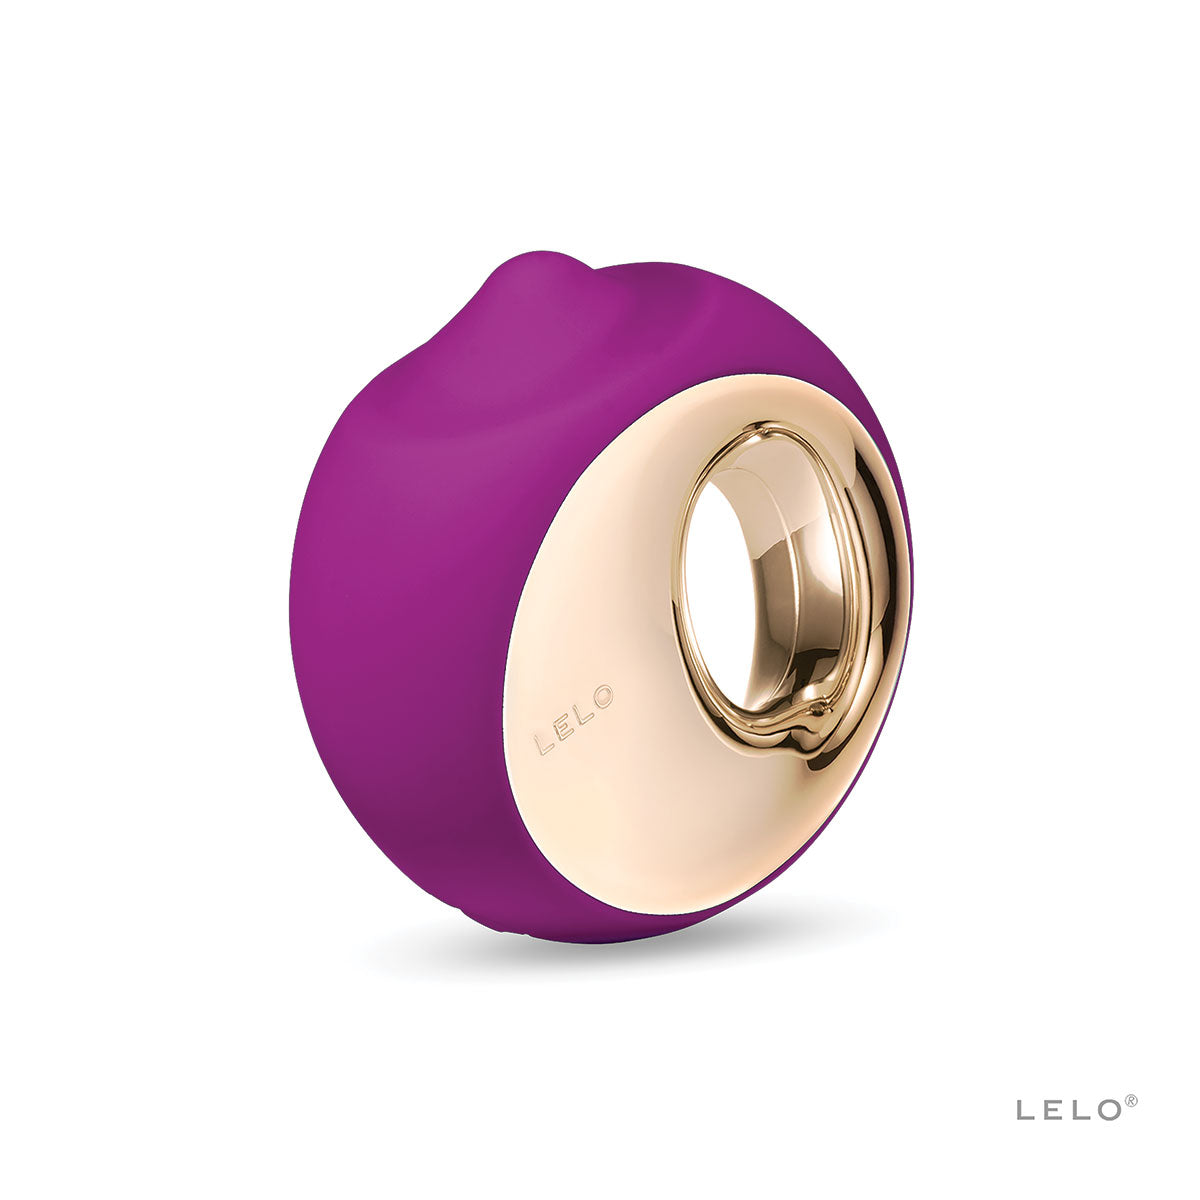 LELO Intimacy Devices LELO Ora 3  - Deep Rose